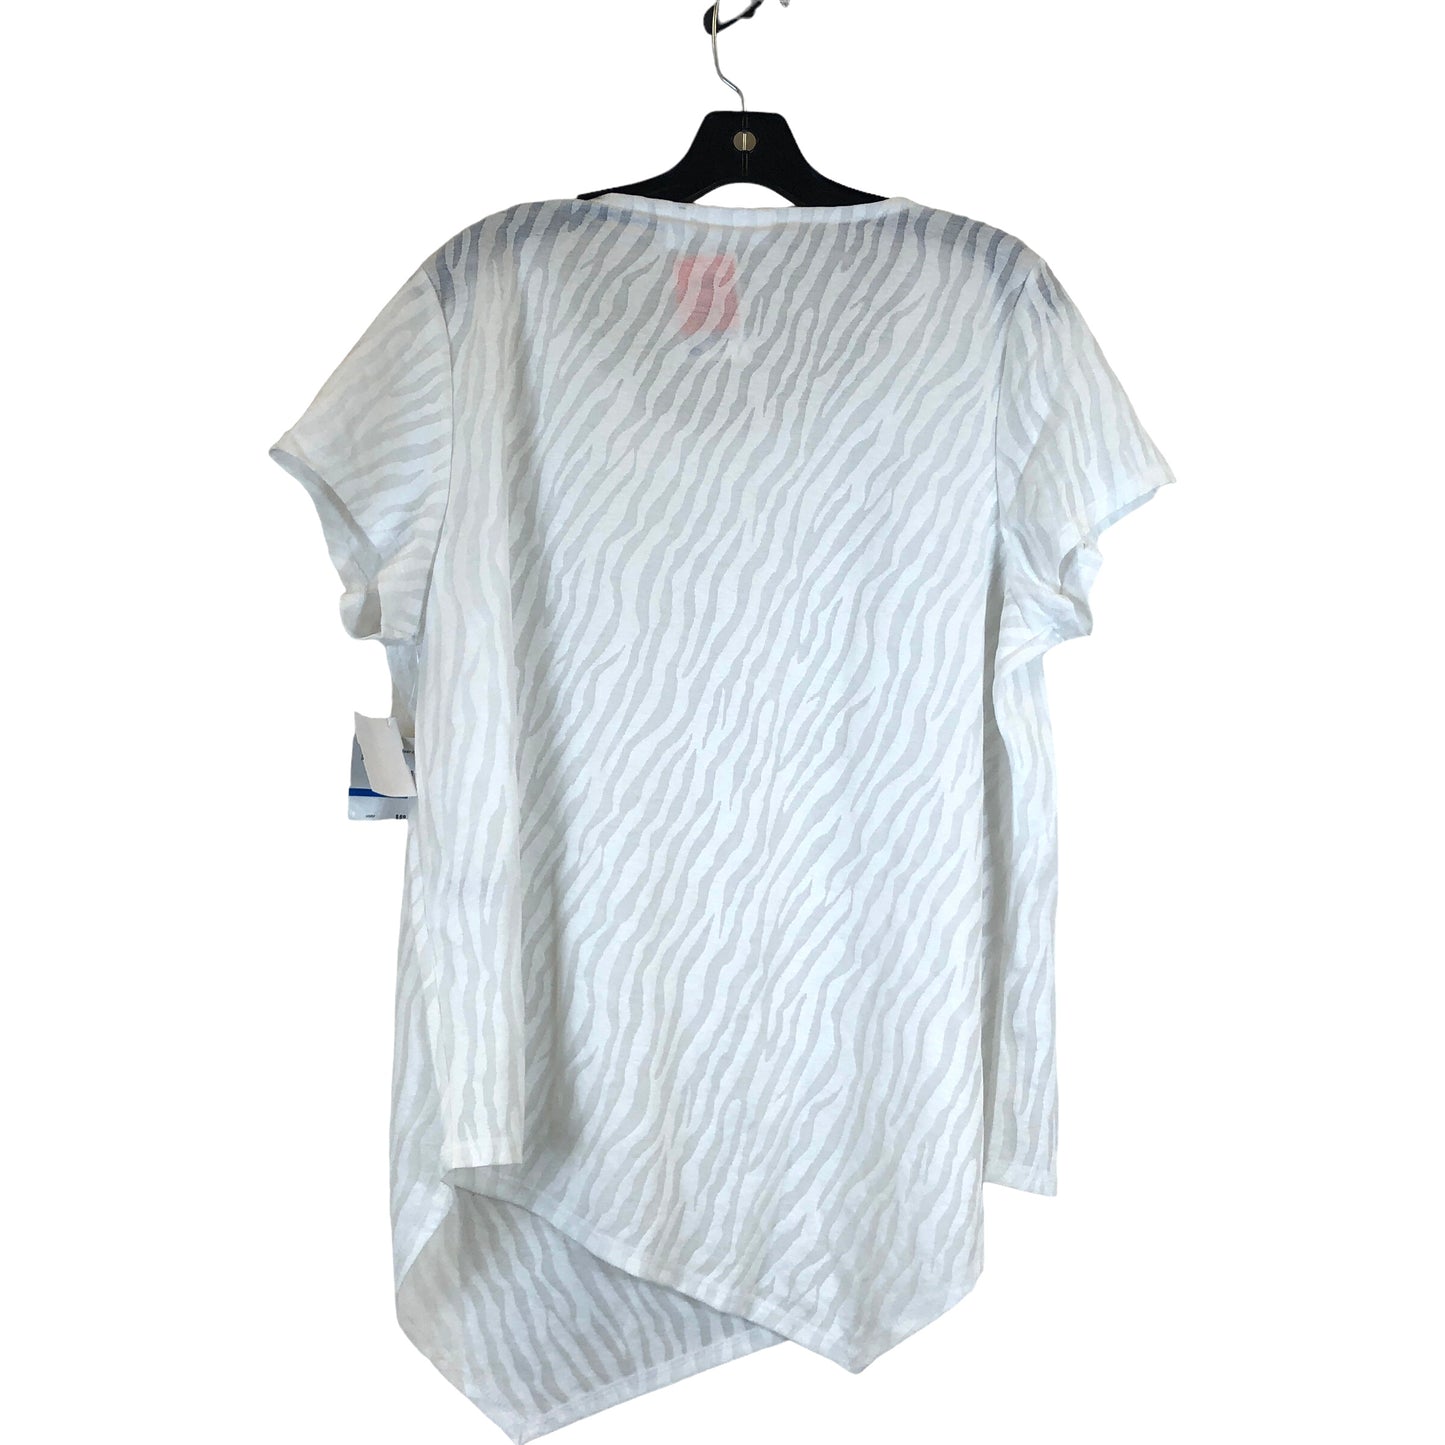 Top Short Sleeve Basic By Rafaella  Size: Petite   Xl